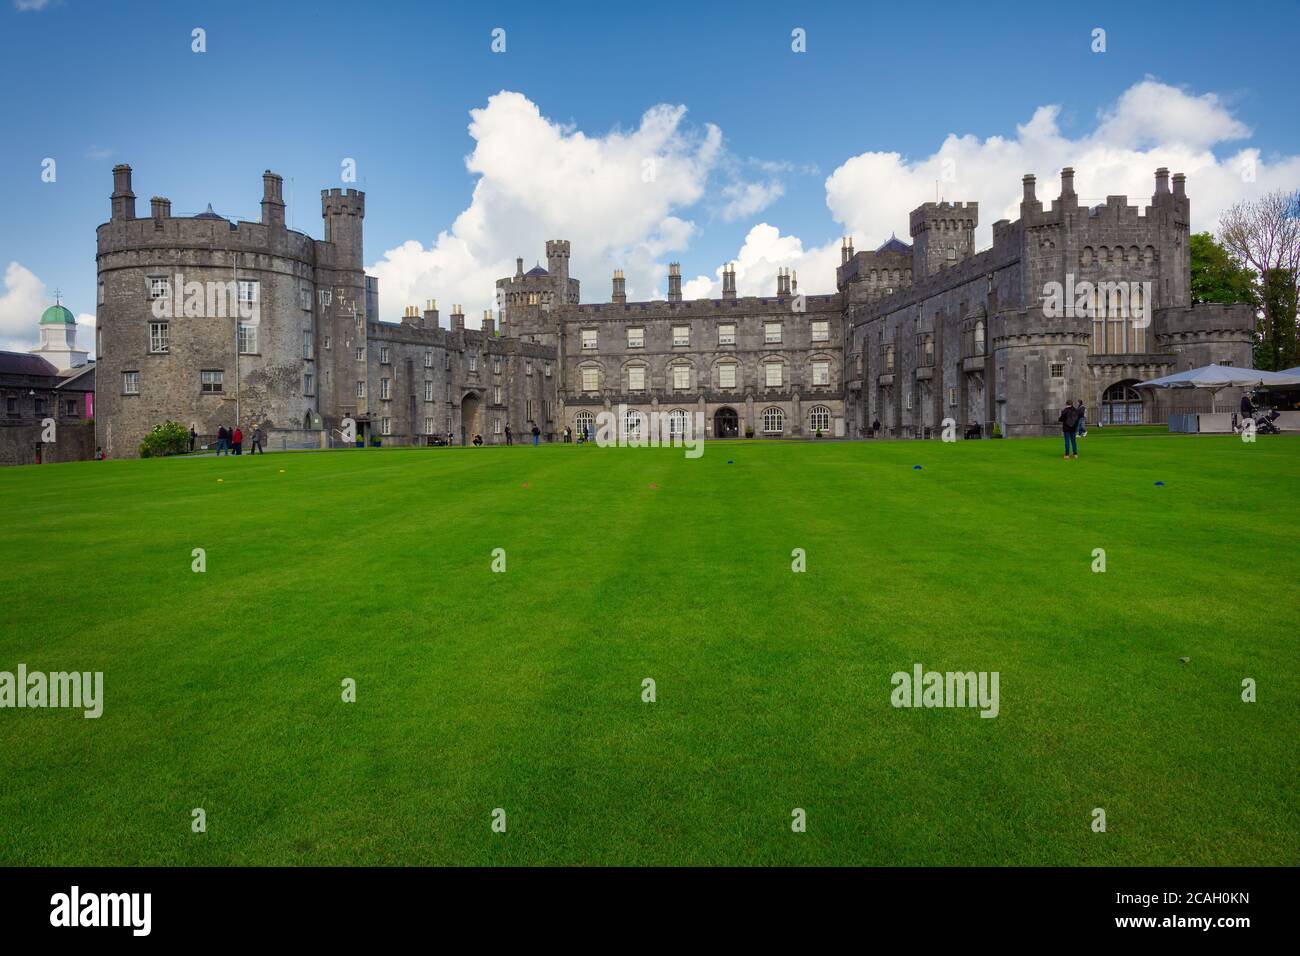 View of the main facade of Kilkenny Castle where several tourists stroll through the park. Kilkenny, Ireland Stock Photo